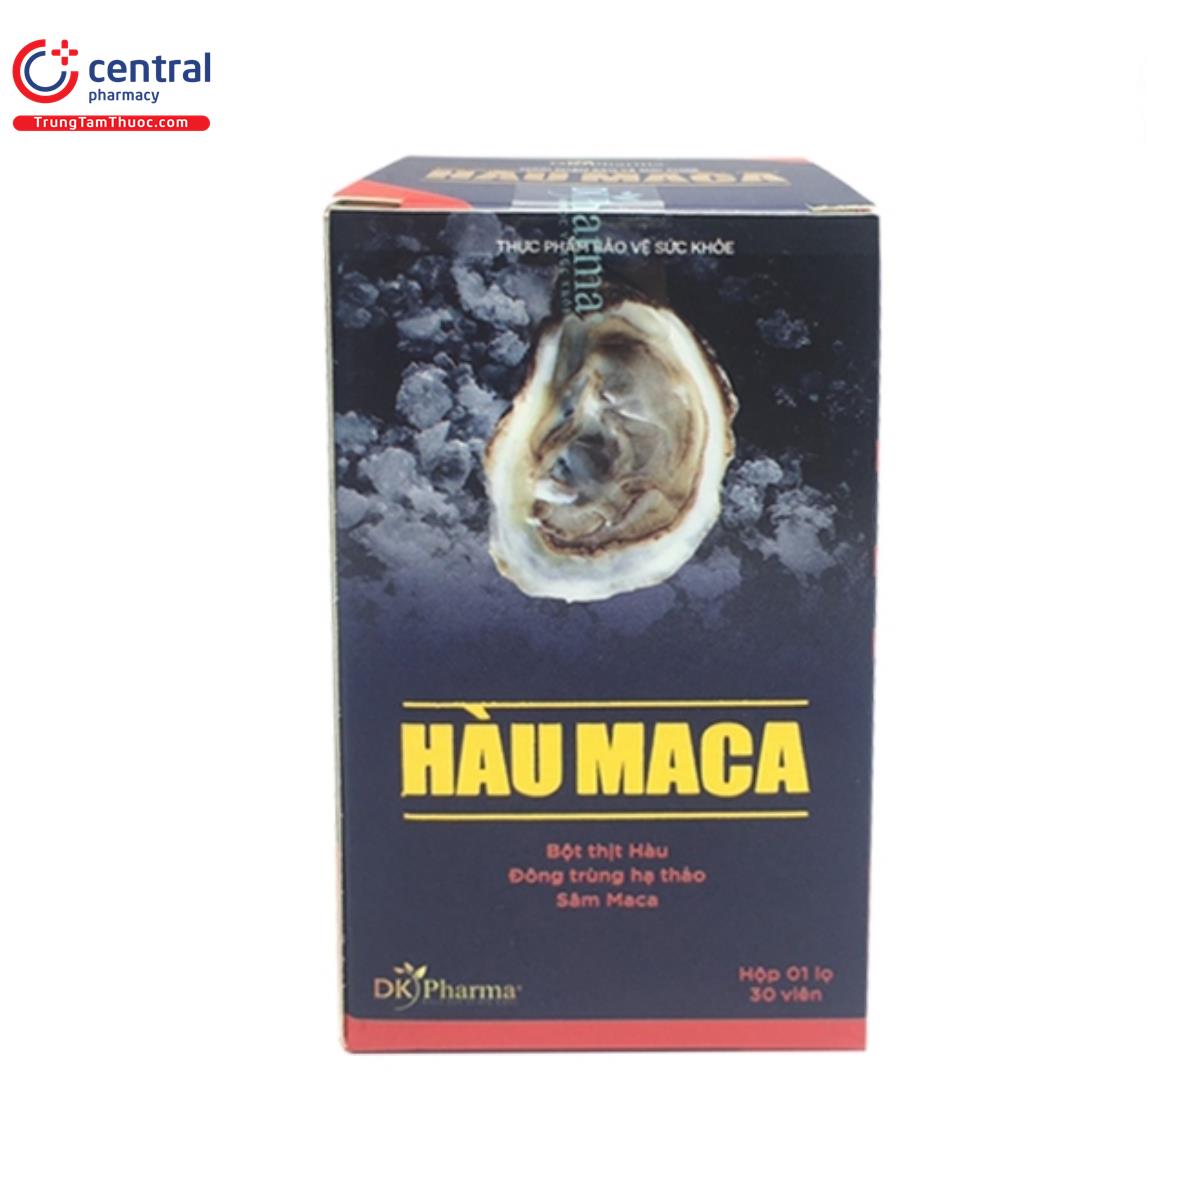 hau maca 2 I3374